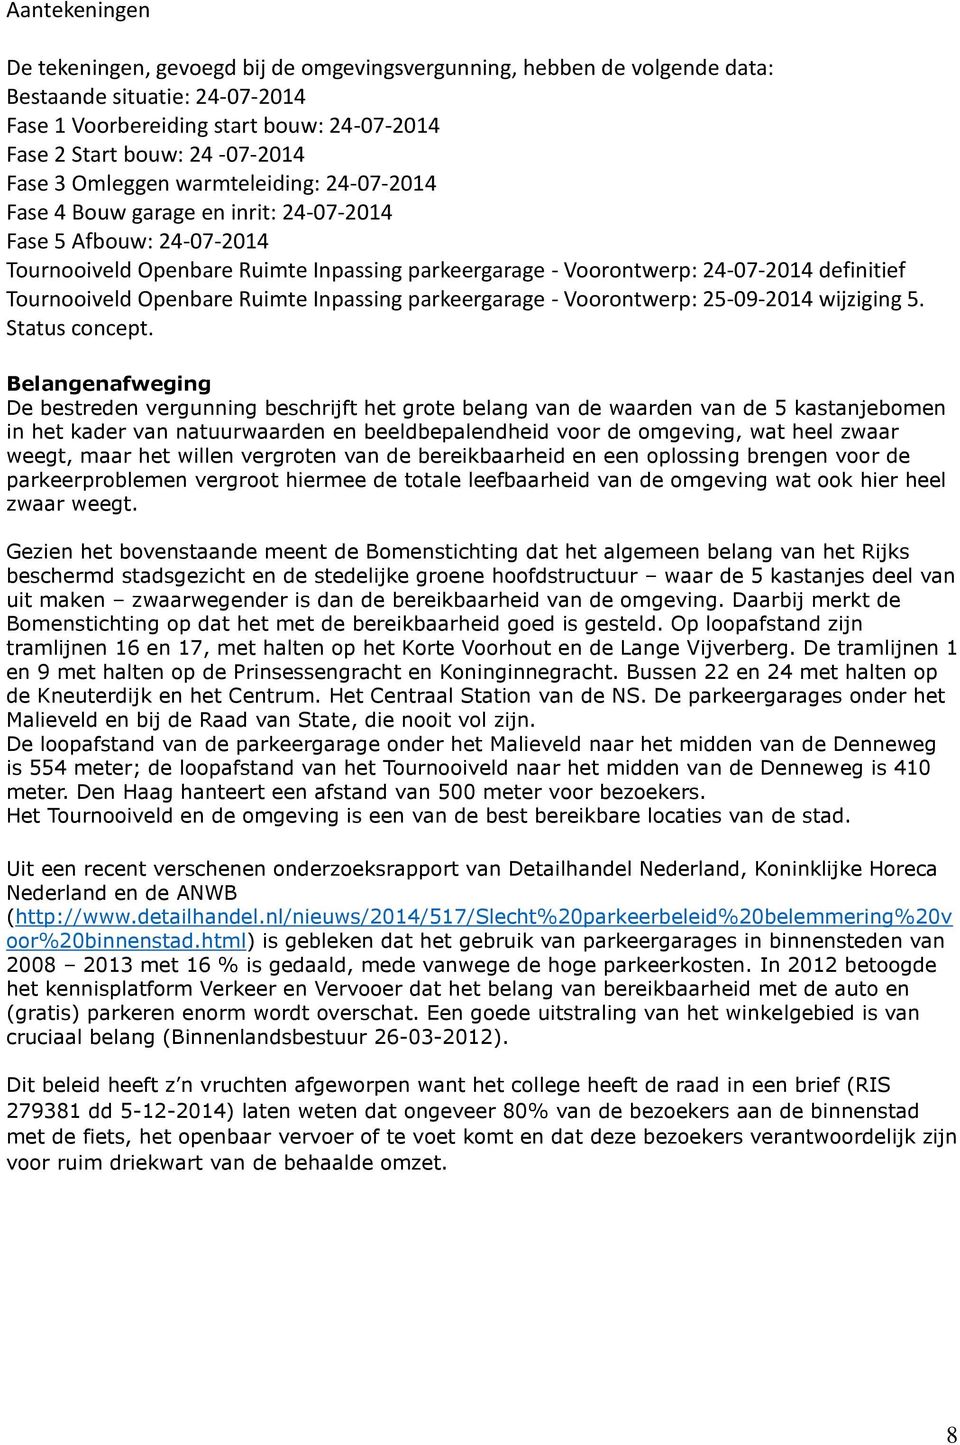 Tournooiveld Openbare Ruimte Inpassing parkeergarage - Voorontwerp: 25-09-2014 wijziging 5. Status concept.